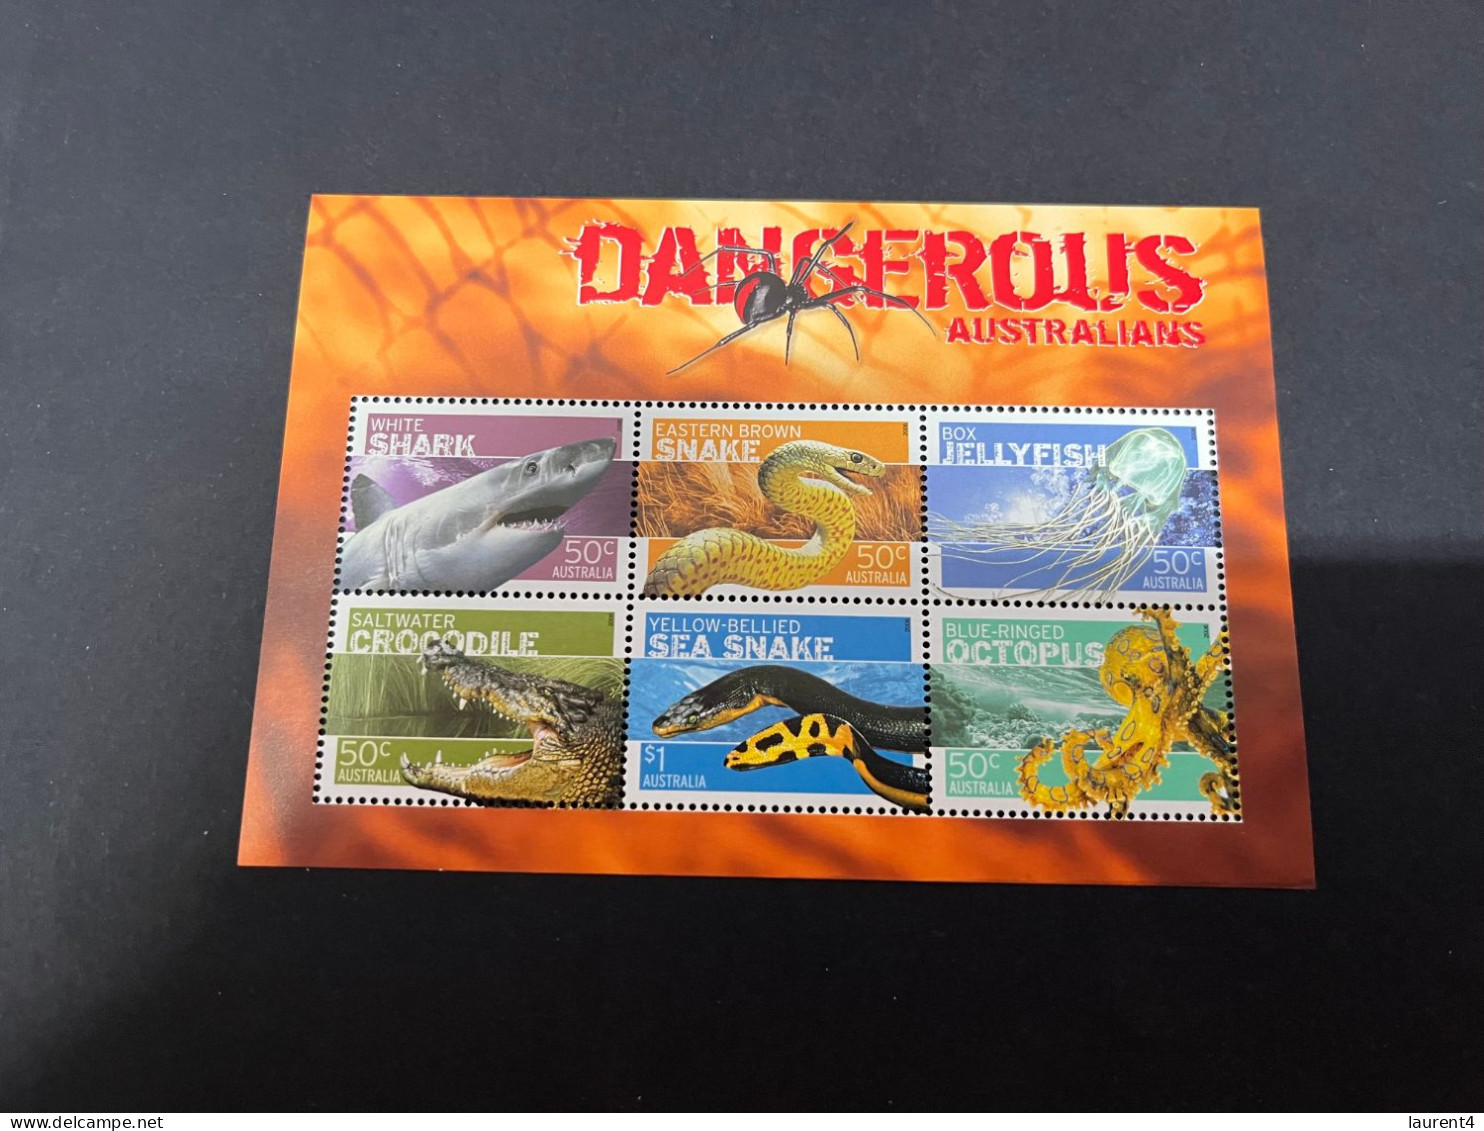 3-10-2023 (stamp) Australia - Dangerous Australian Mint Mini-sheet - Mint Stamps